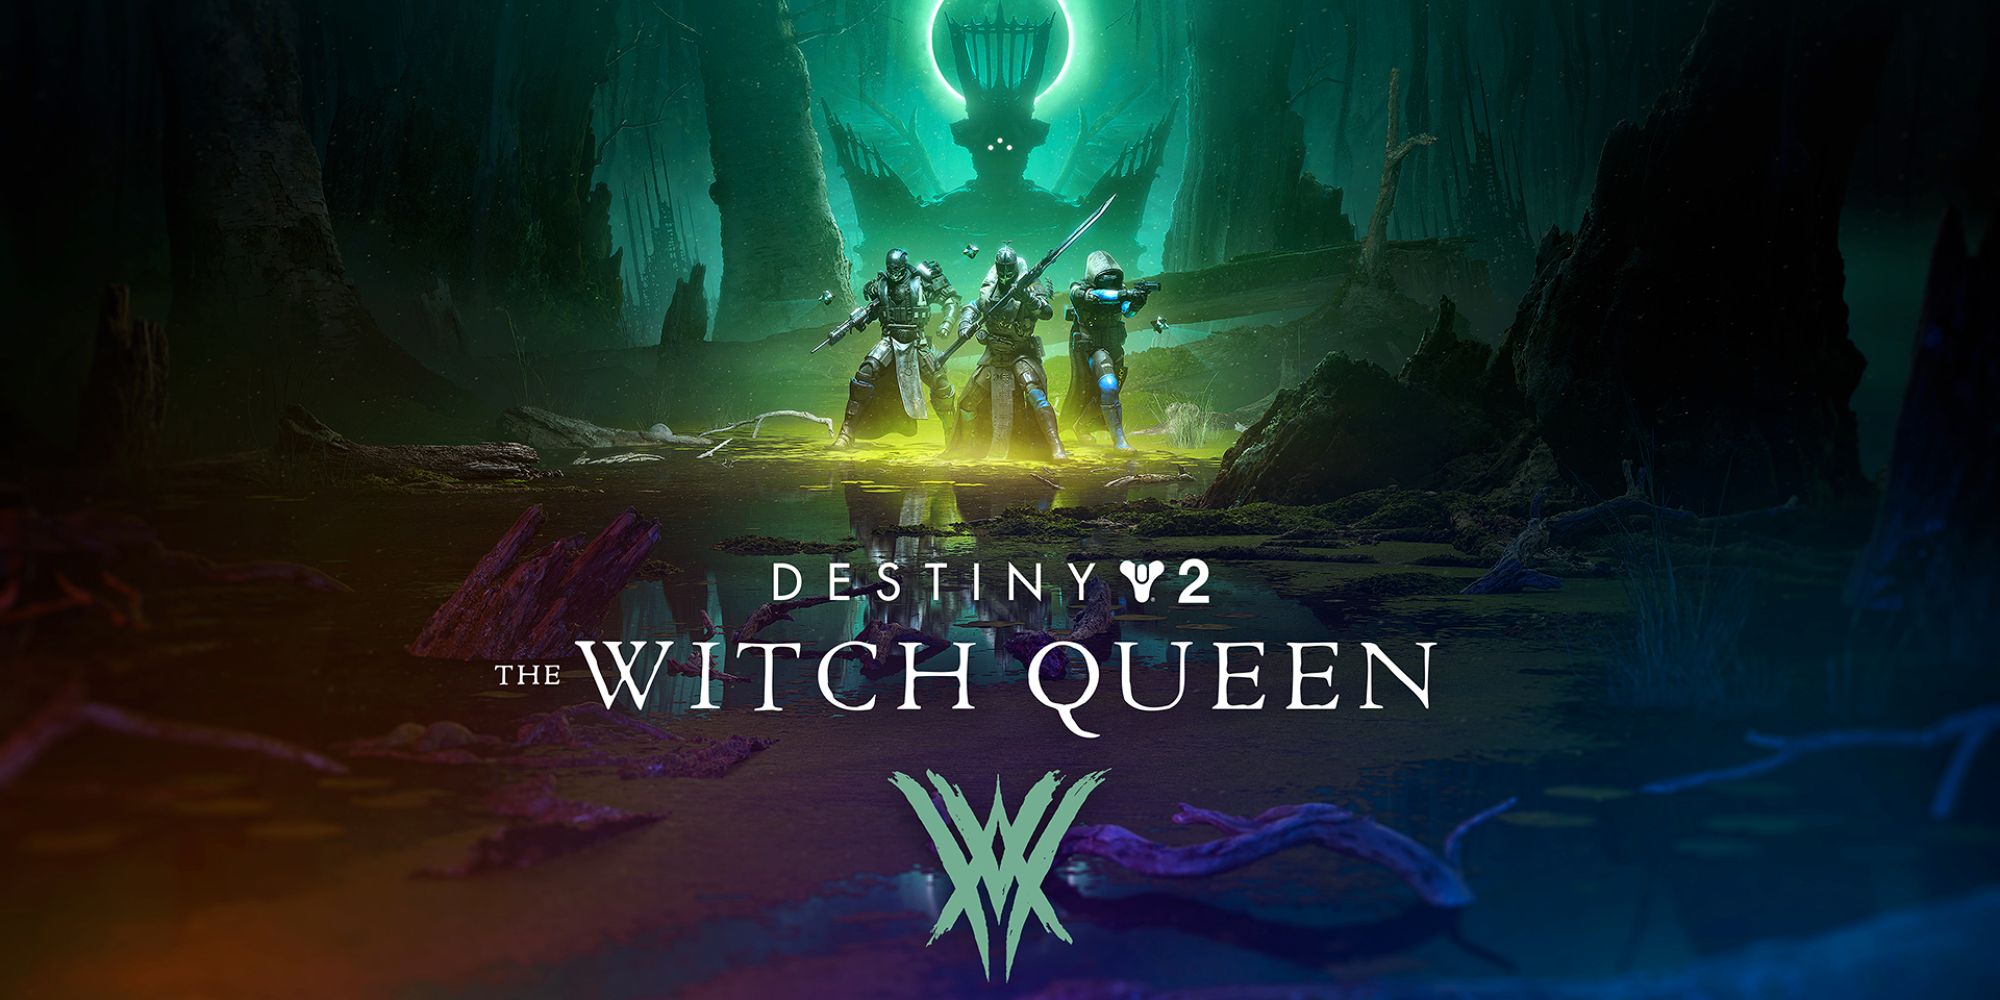 Reseña de Destiny 2: The Witch Queen - Oryx finalmente ha sido destronado